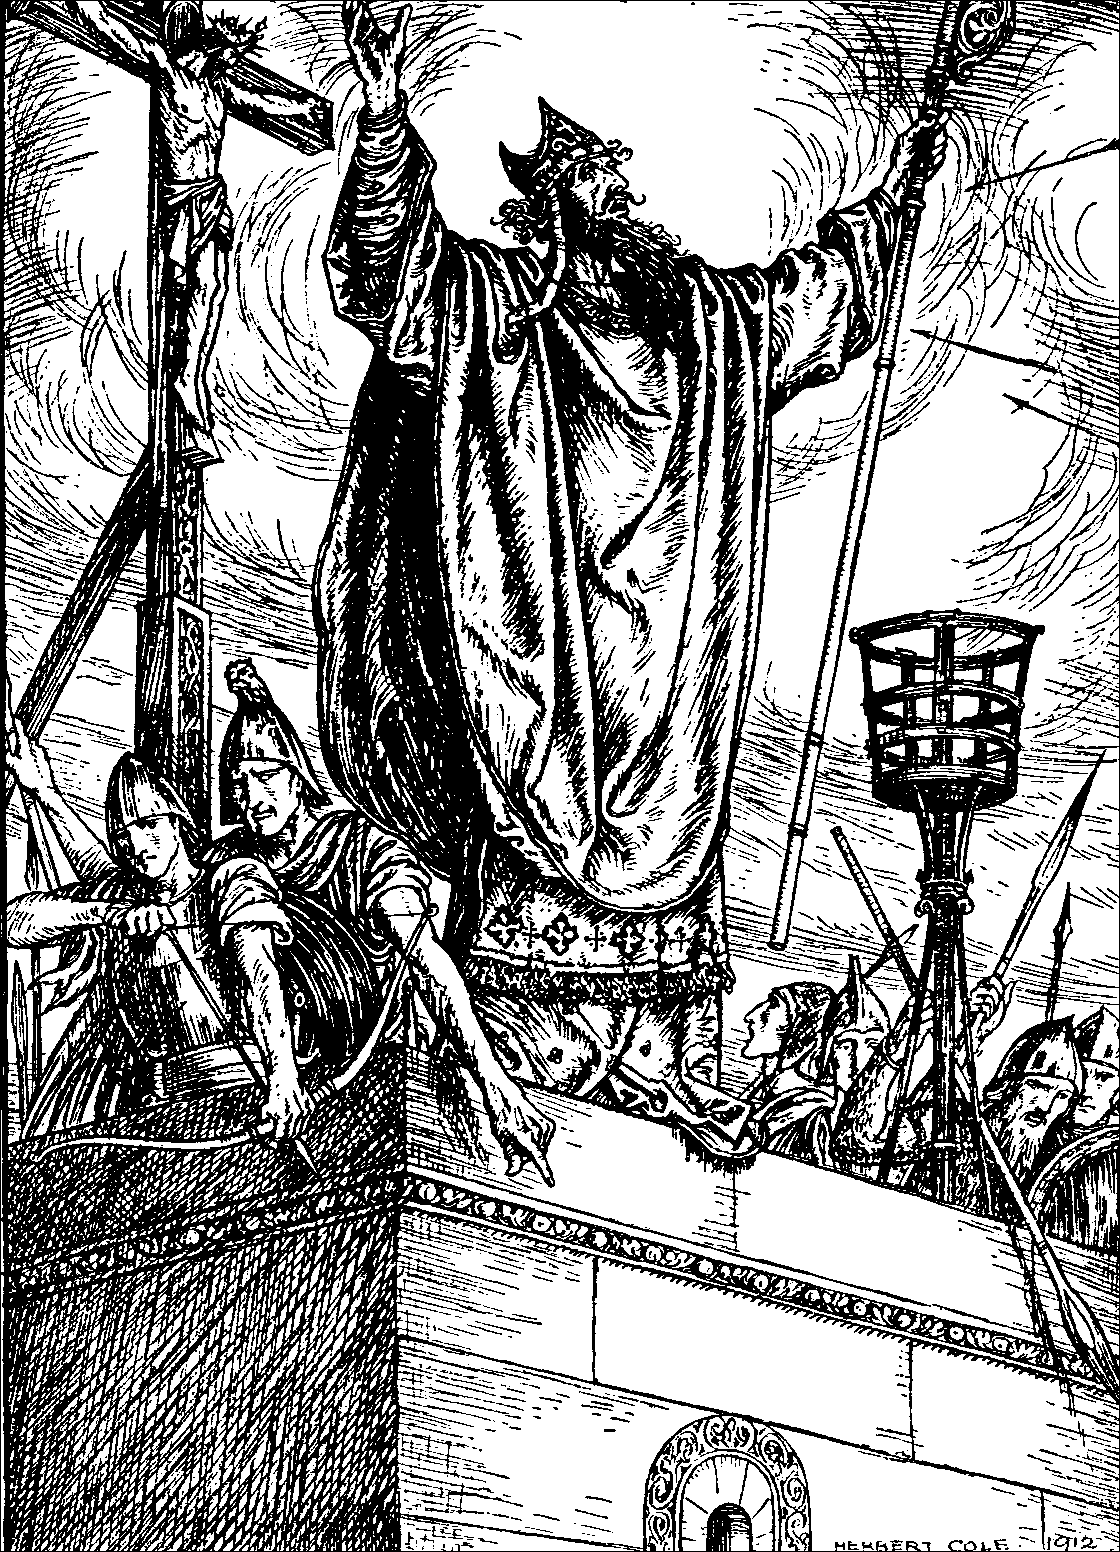 Jacobus of Edessa